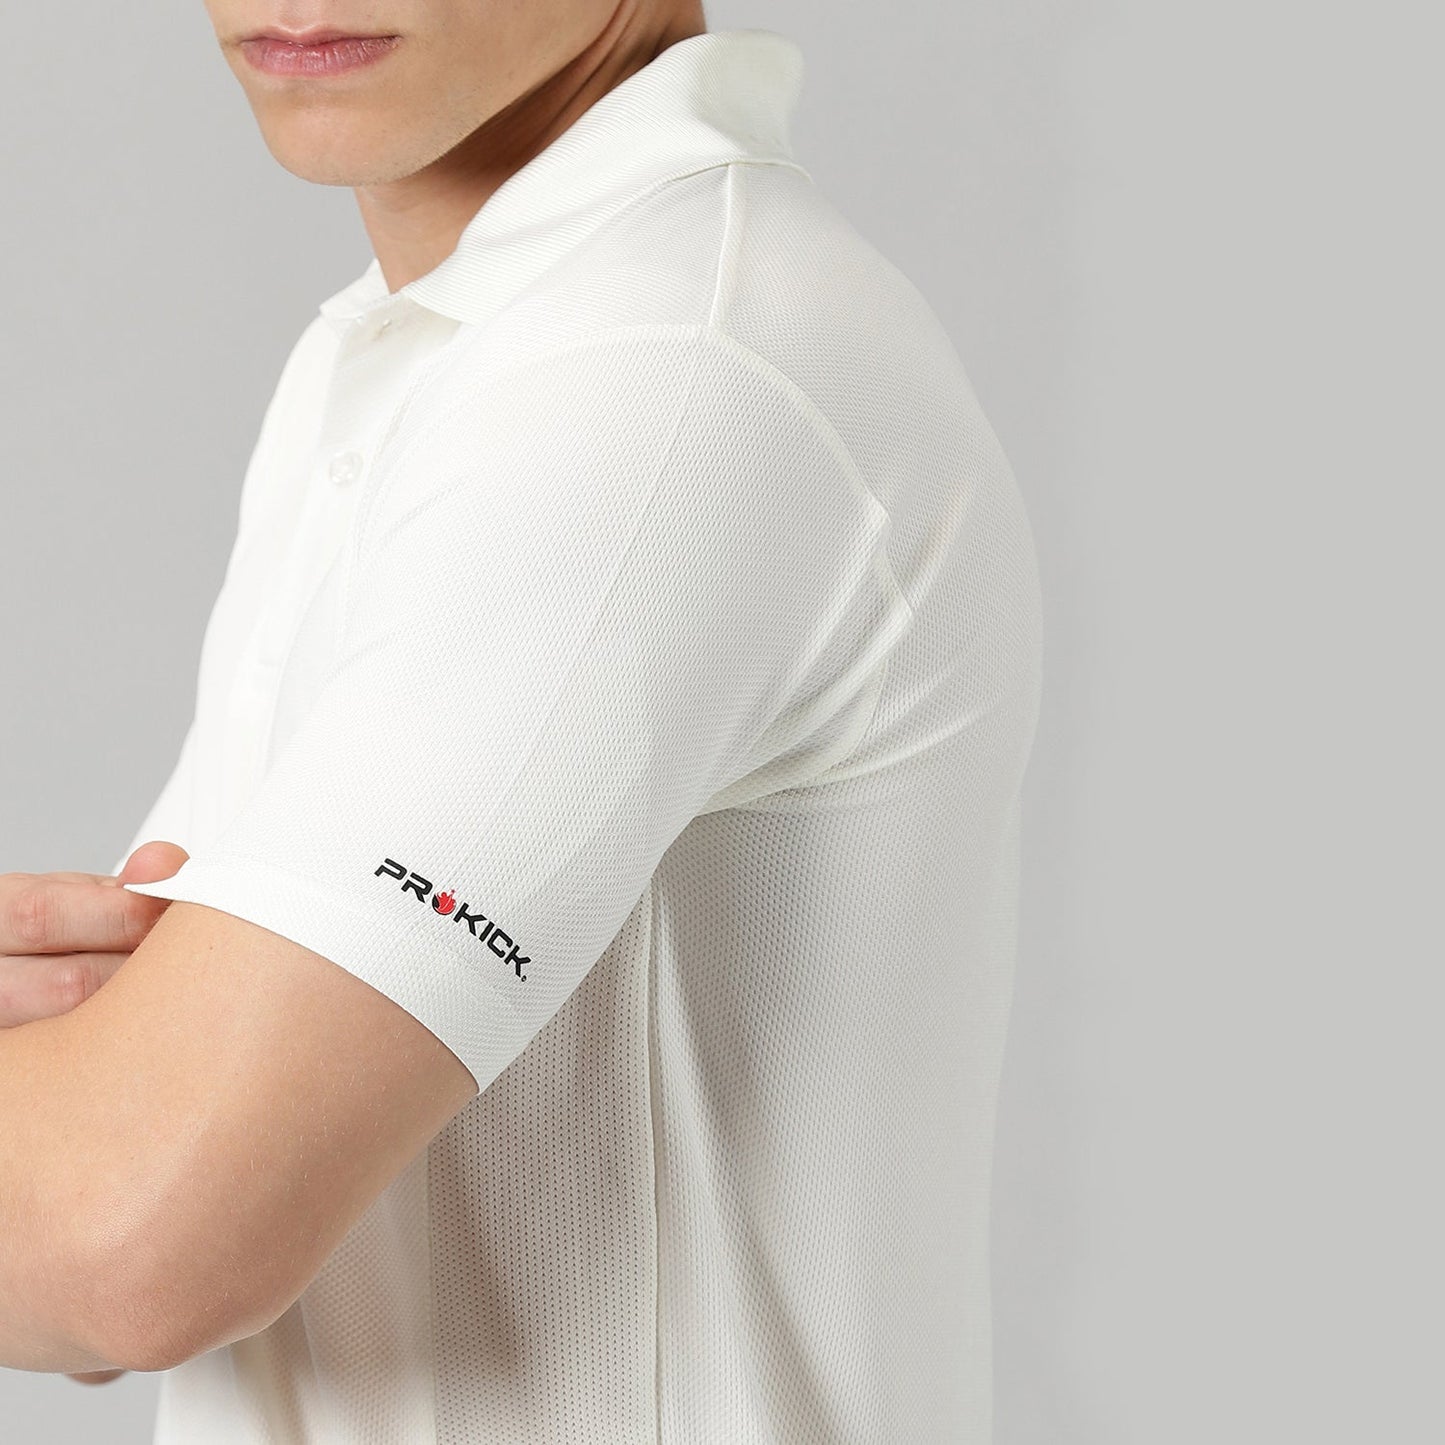 Prokick Elite Half Sleeves Cricket T-Shirt for Juniors, Off White - Best Price online Prokicksports.com